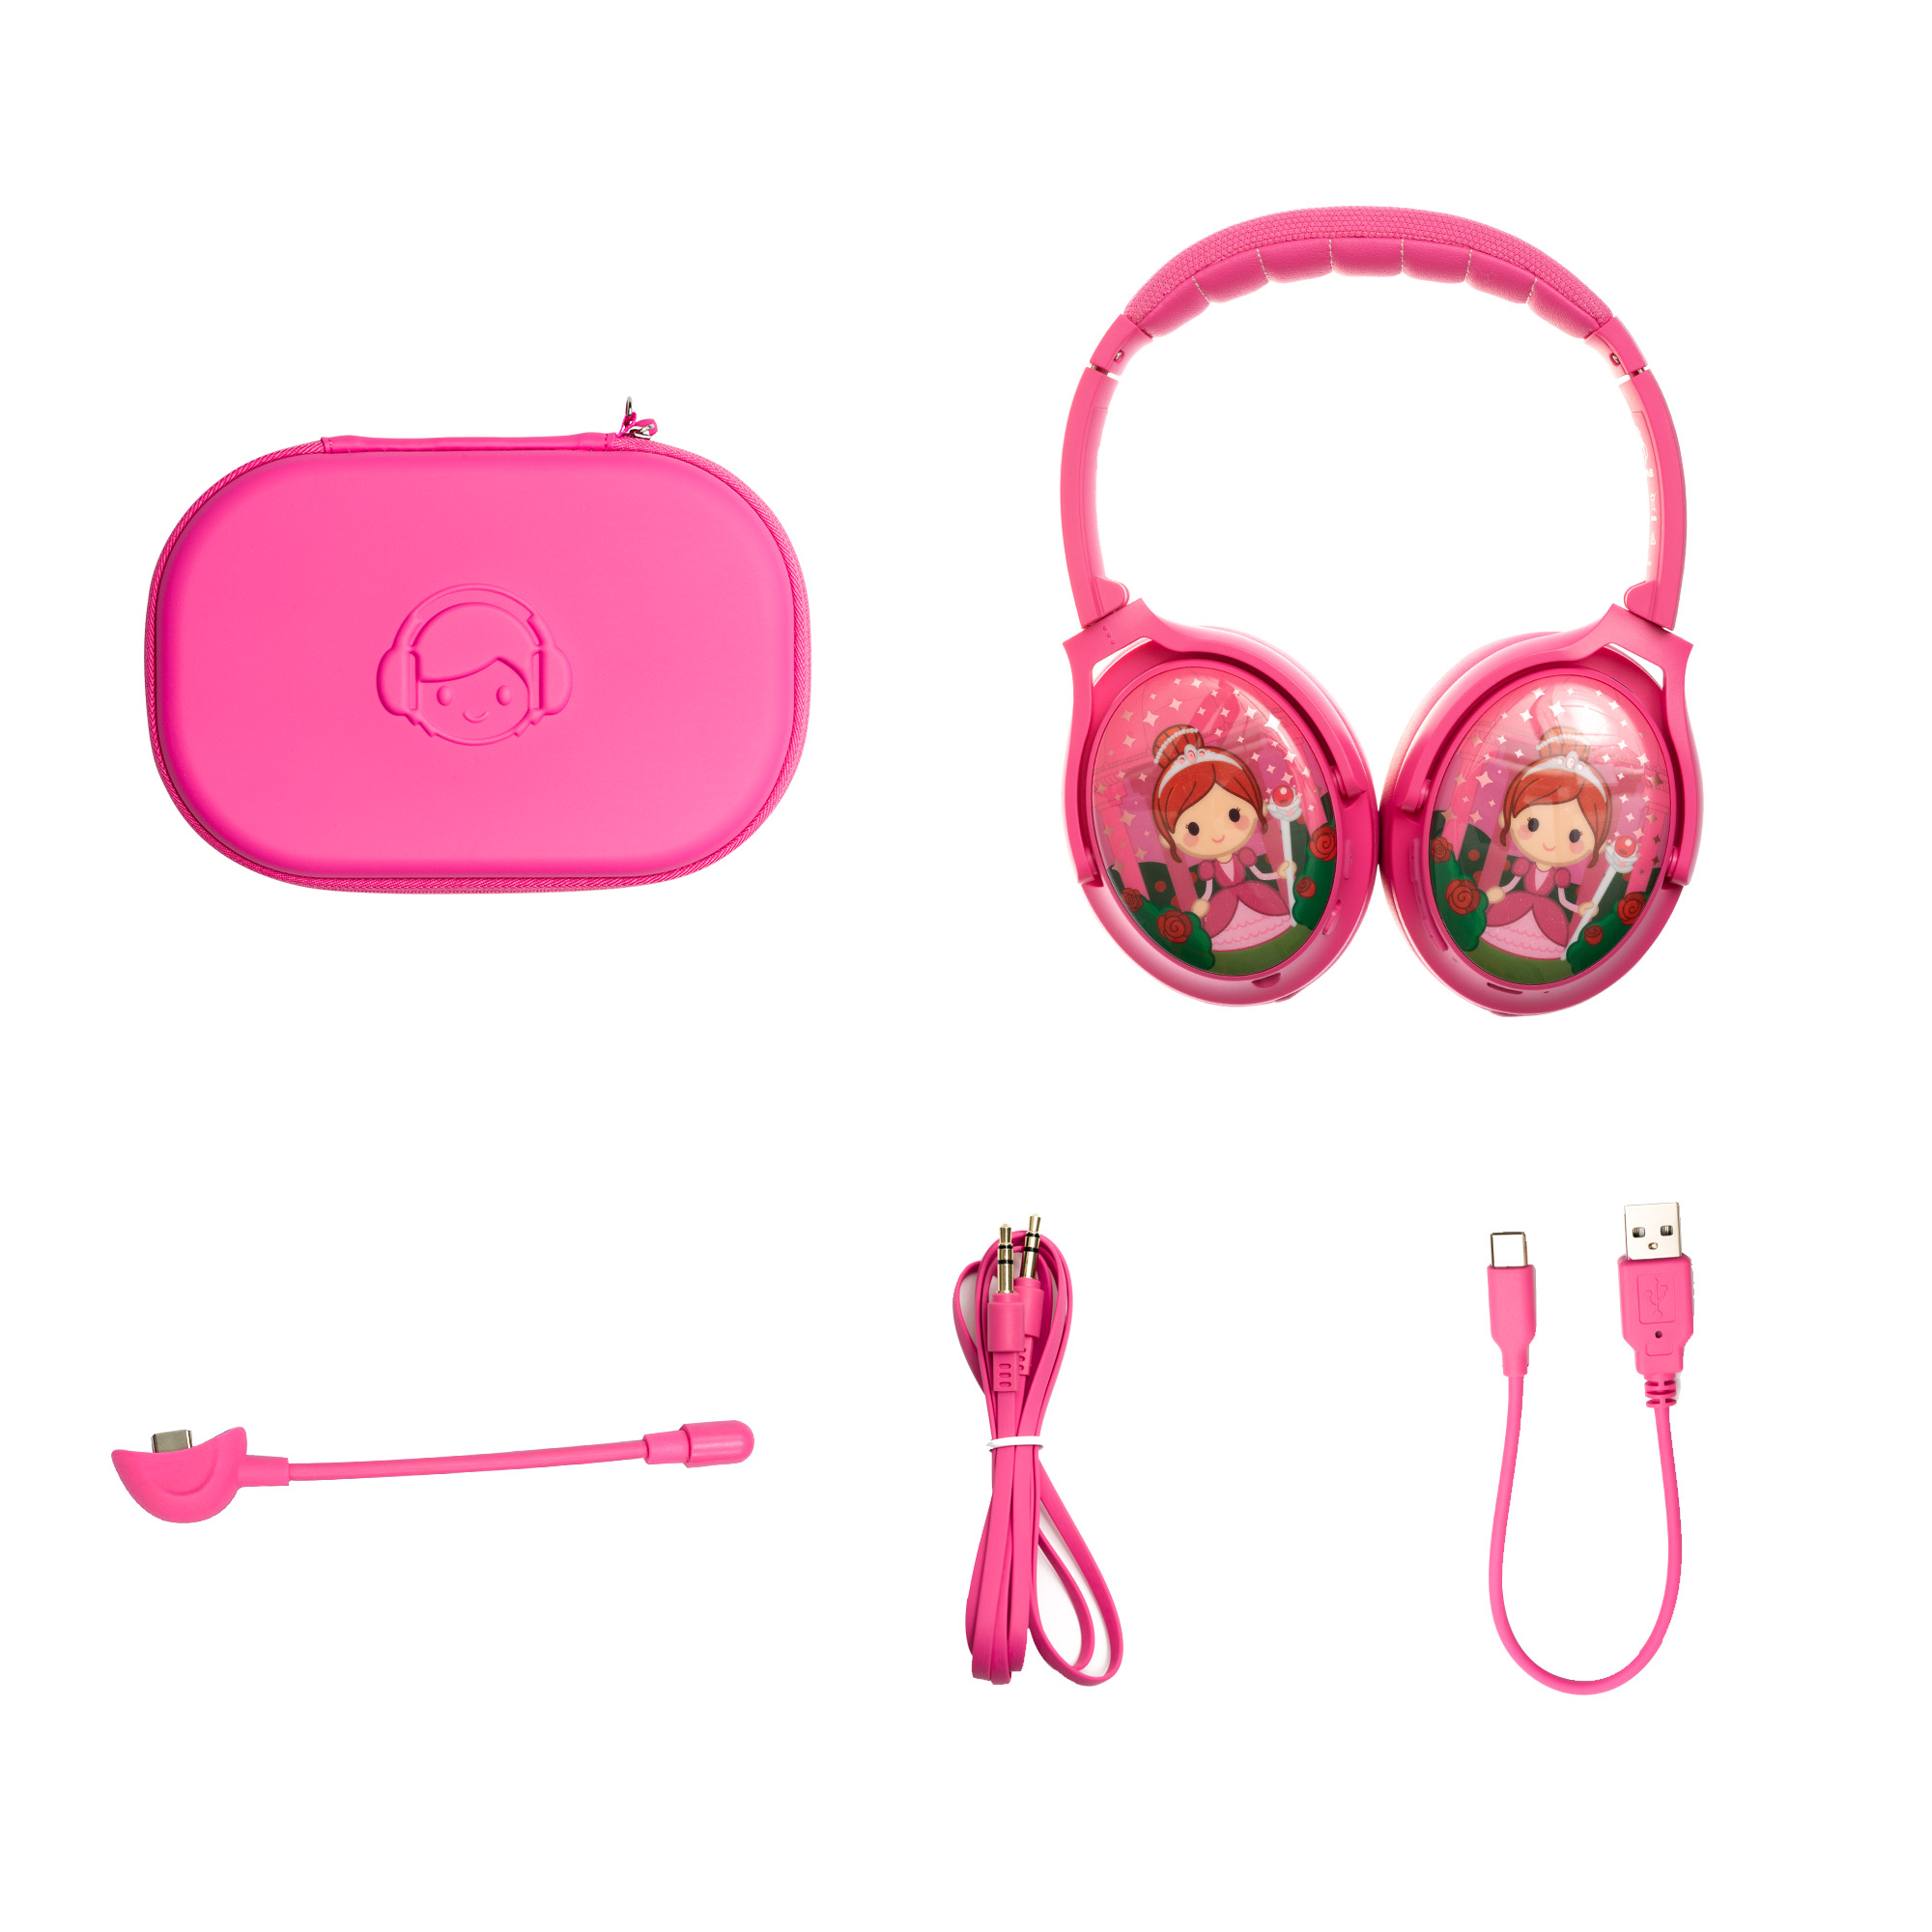 BUDDYPHONES Cosmos Plus, Over-ear Kinder Kopfhörer Bluetooth Rosa